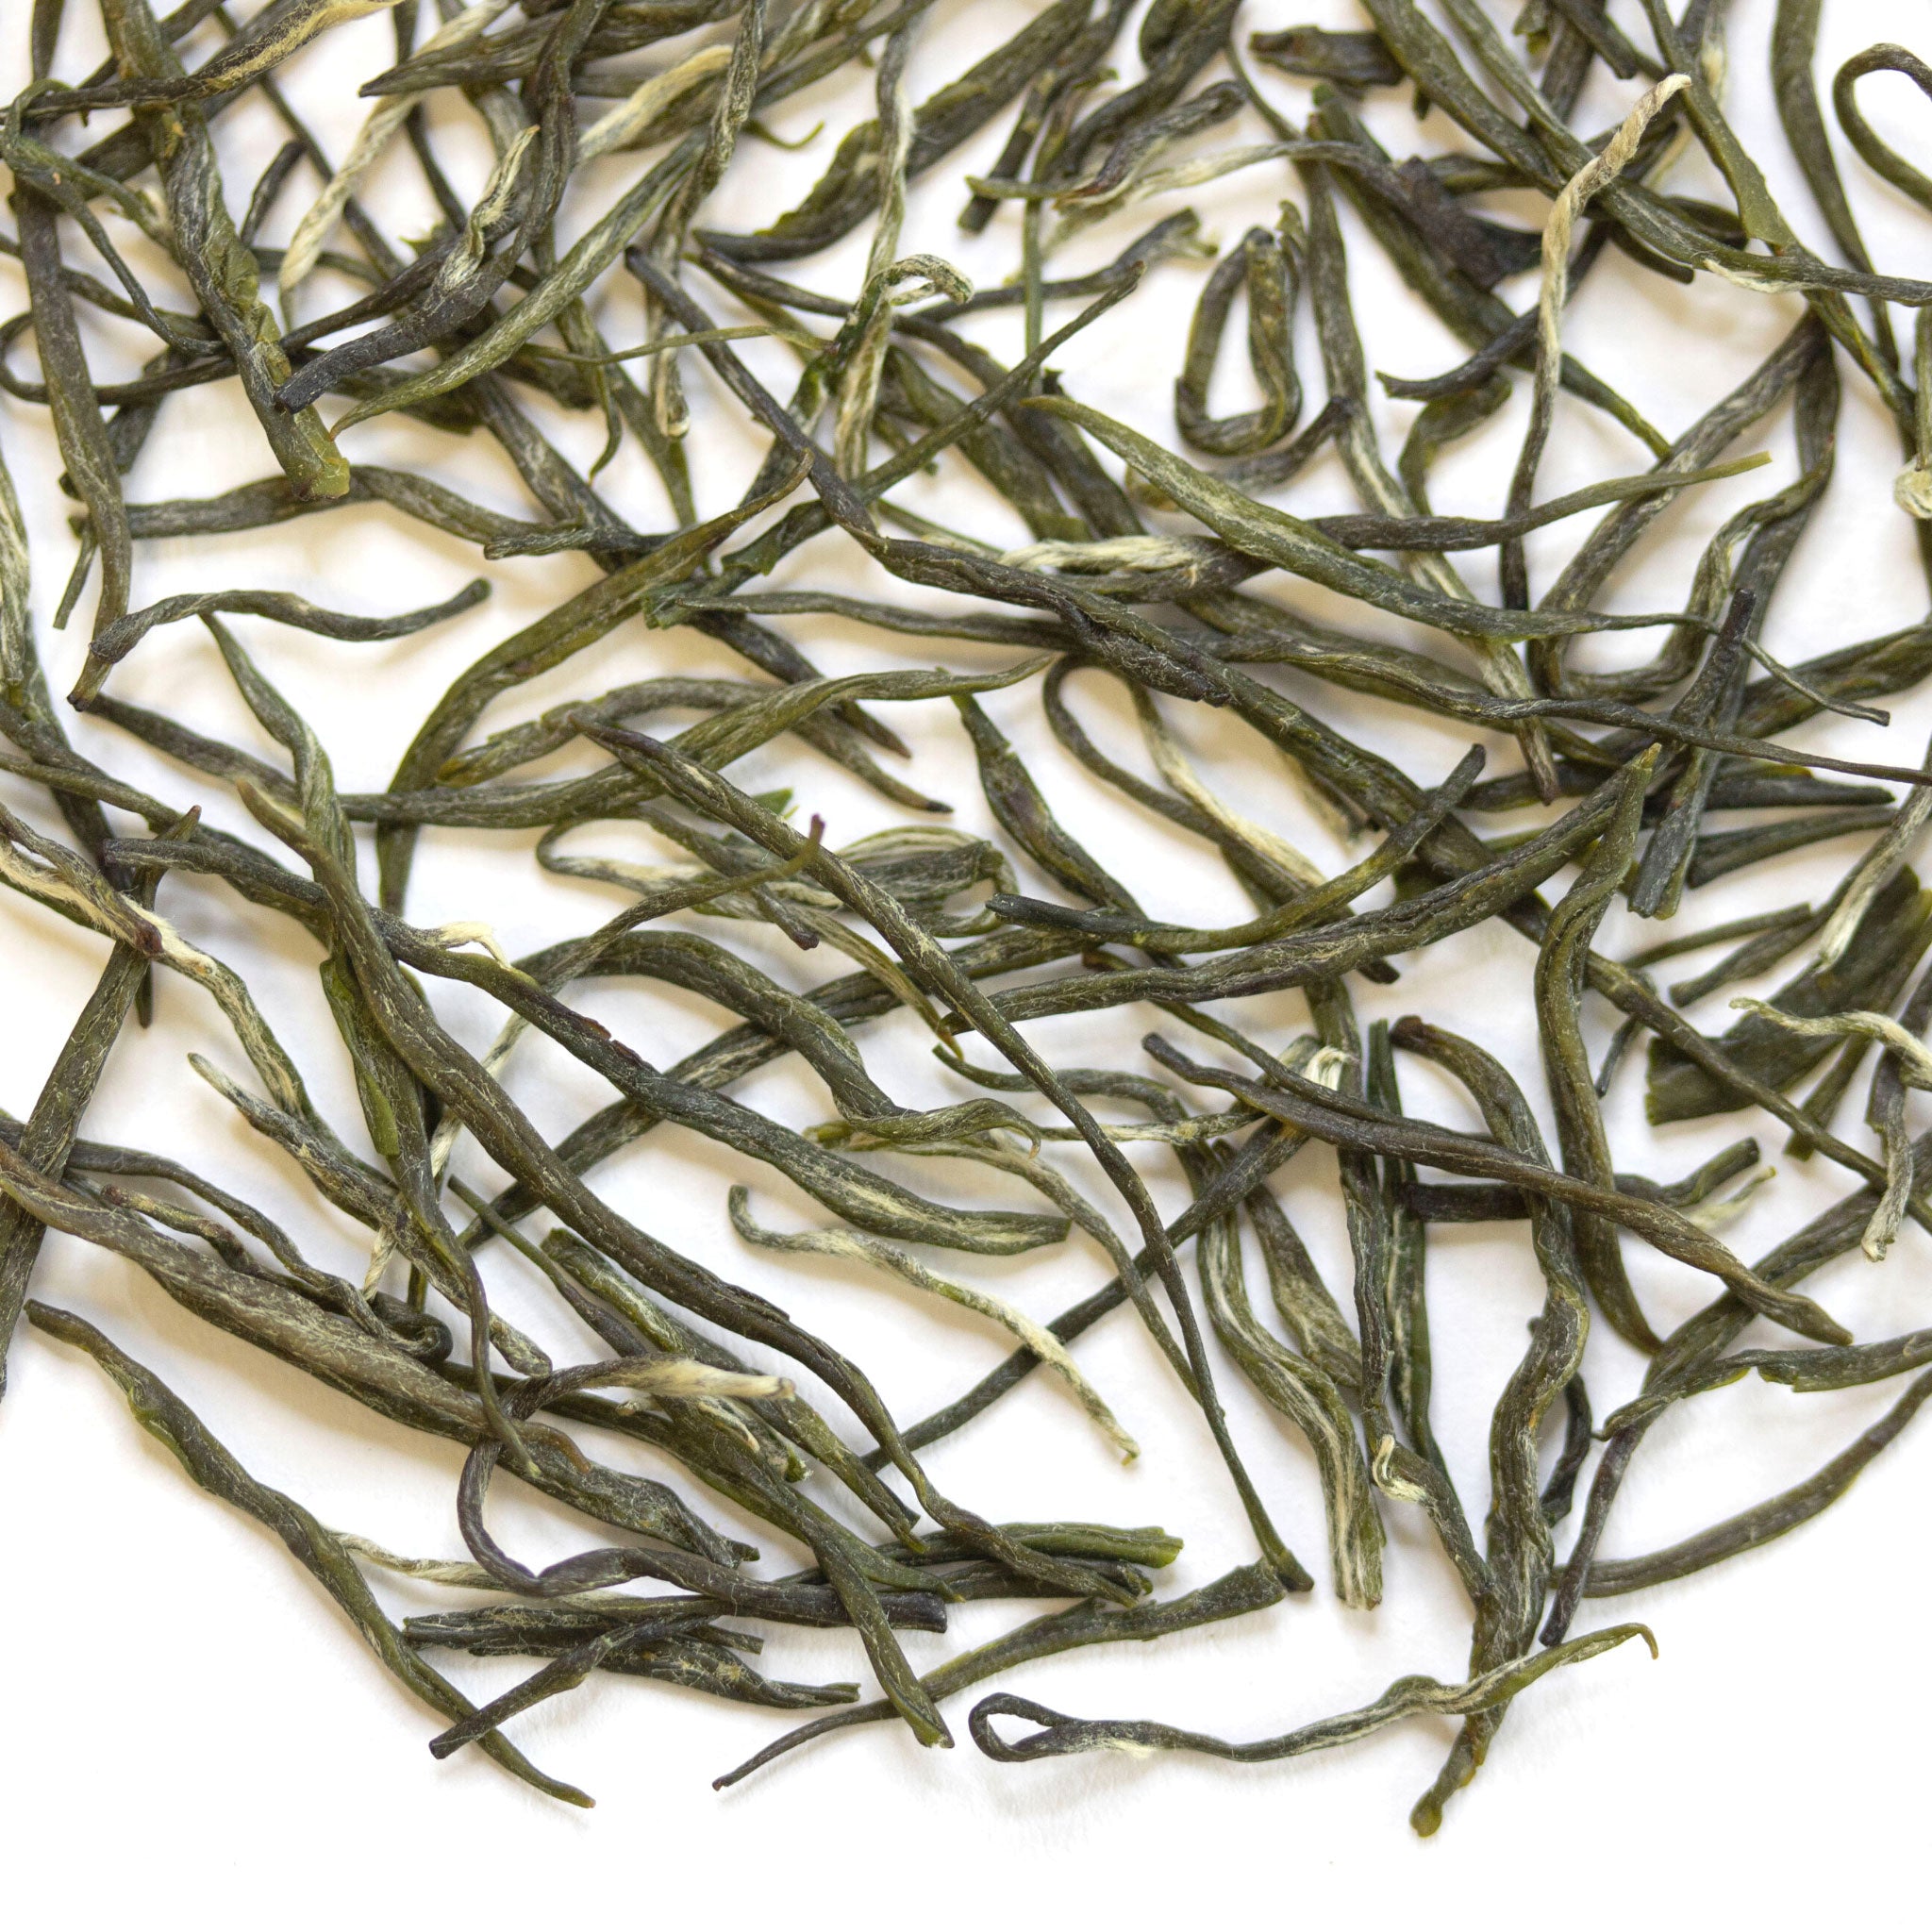 Loose leaf Magic Wand green tea